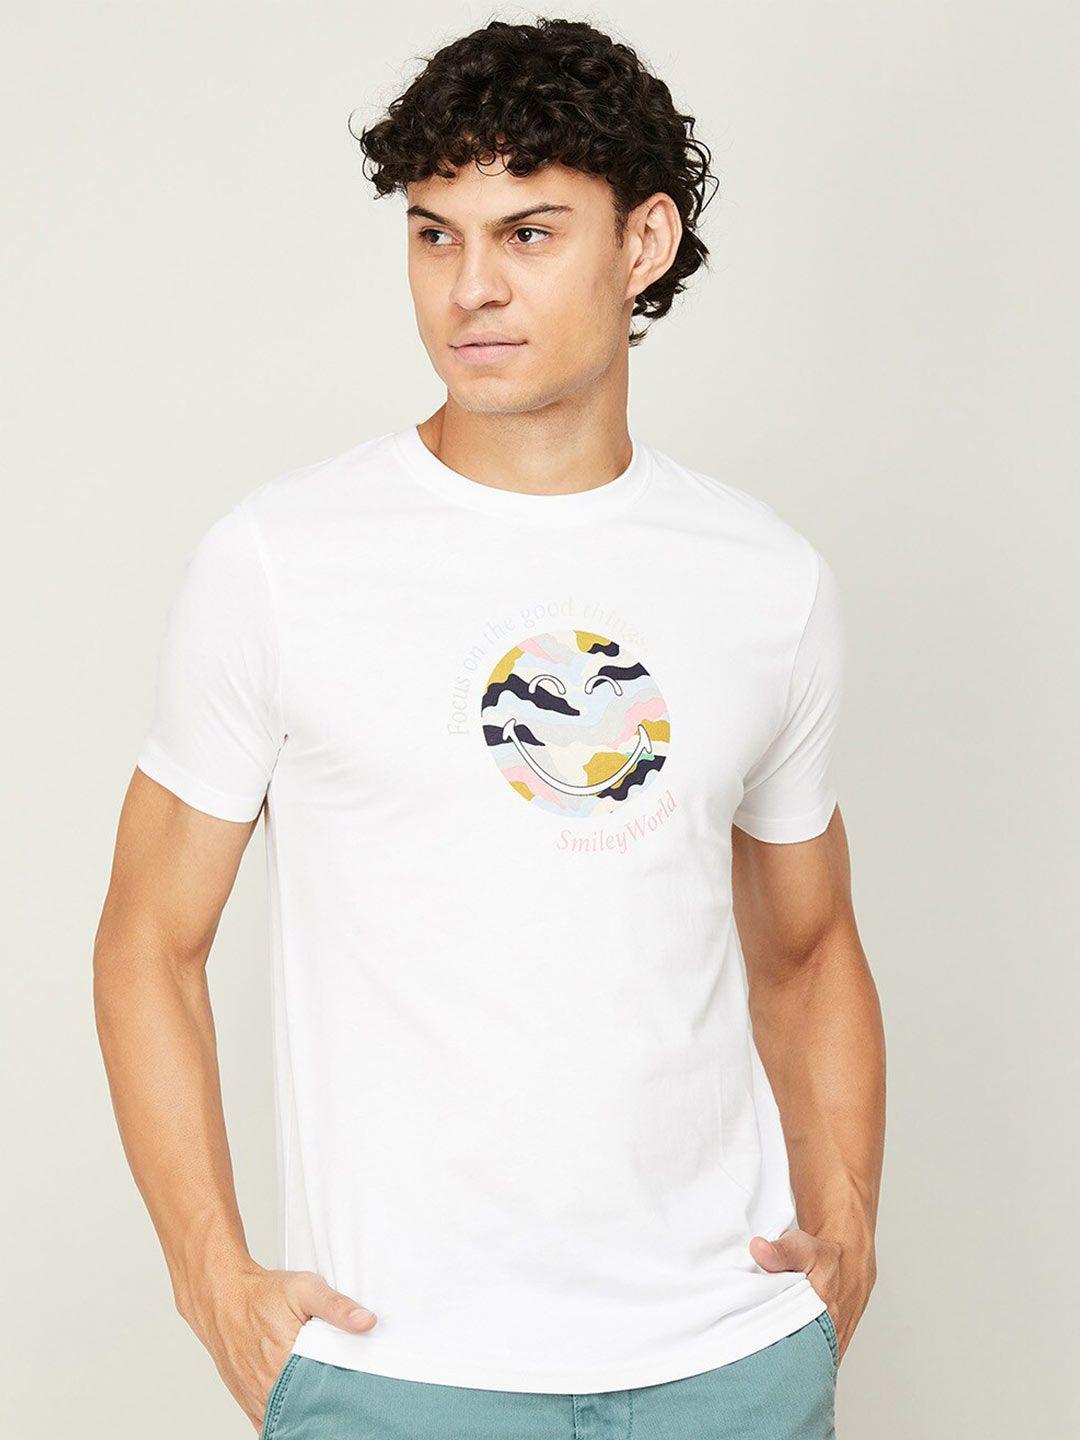 smileyworld men graphic printed round neck cotton t-shirt